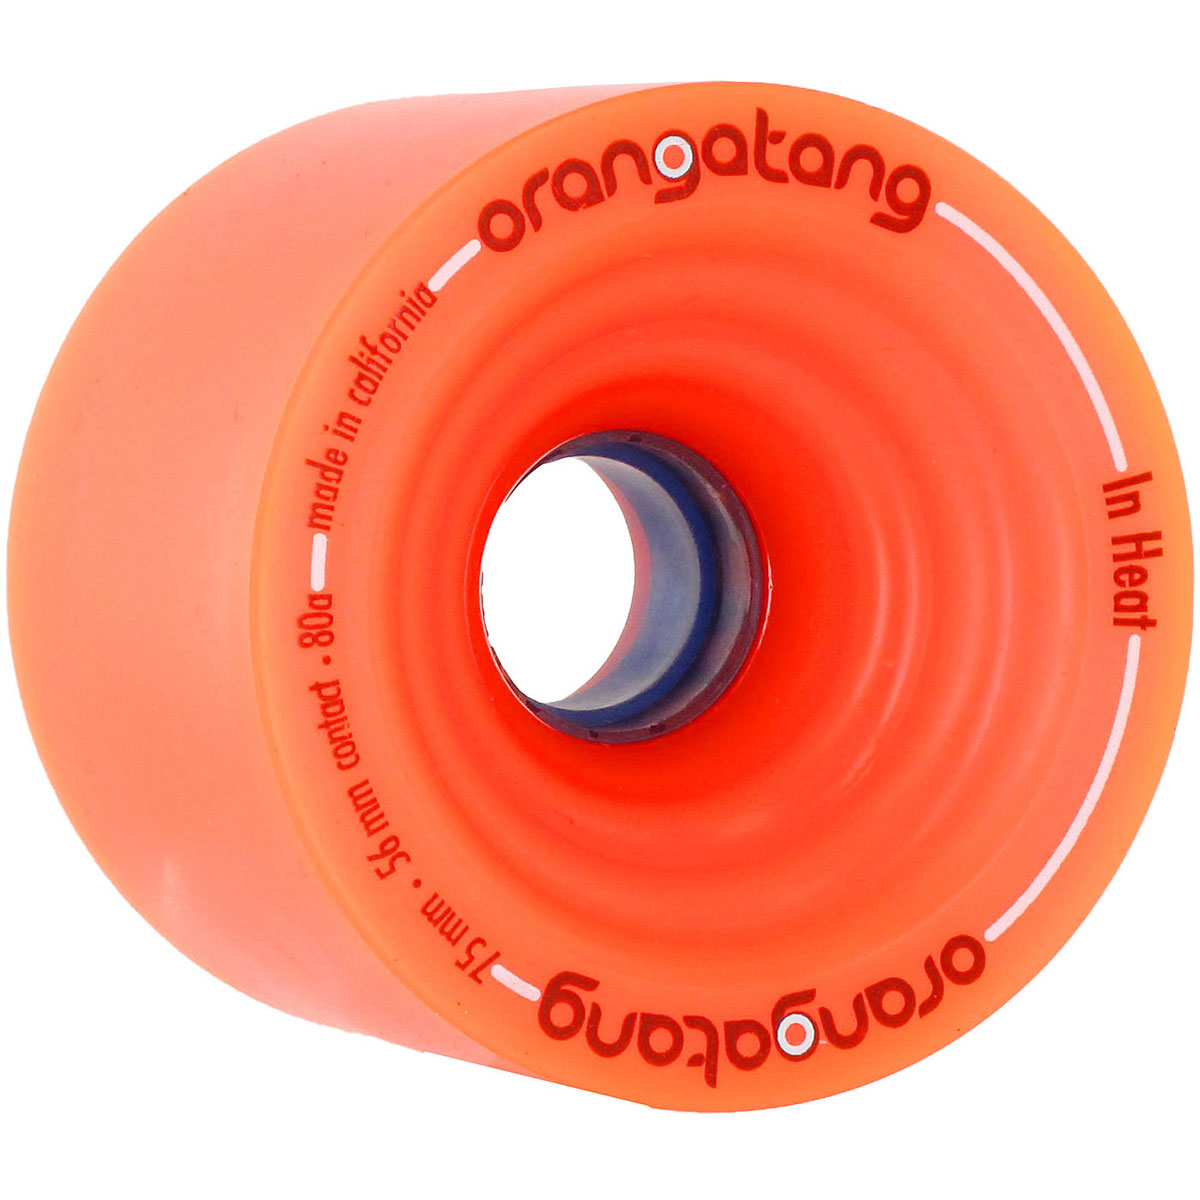 Orangatang In Heat Longboard Wheels 75mm 80a Orange image 1